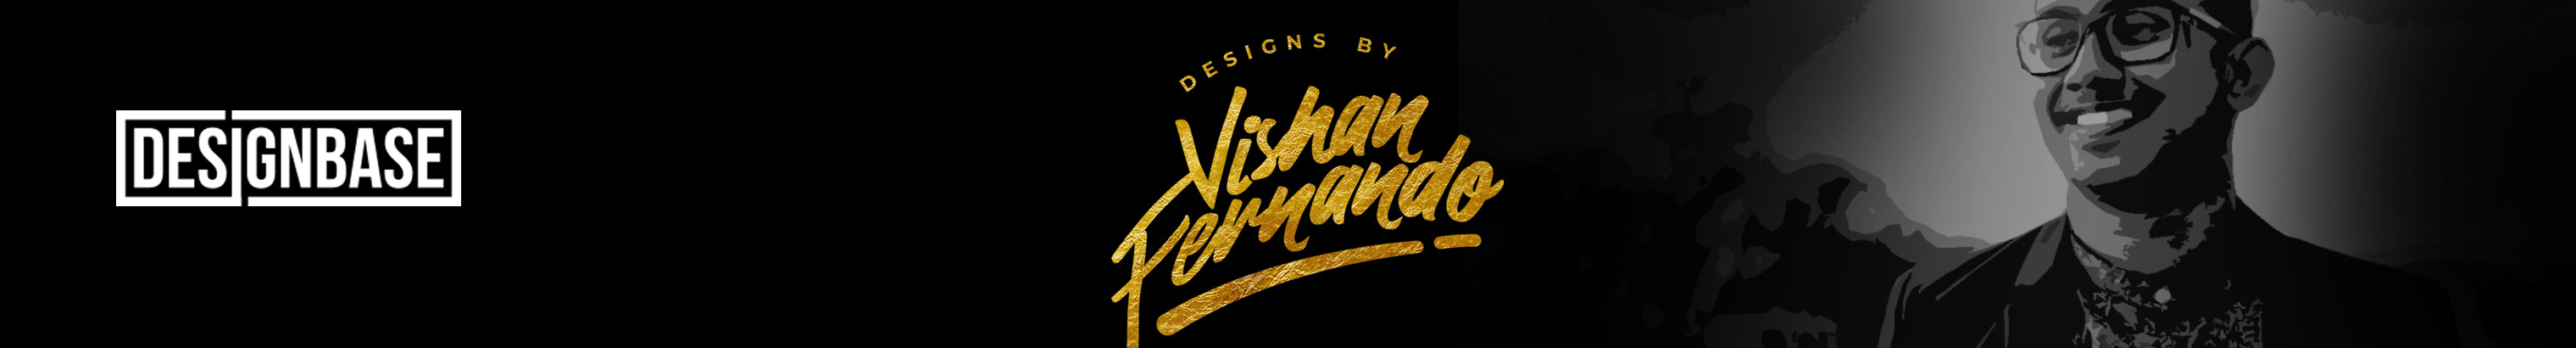 Vishan Fernando profil başlığı